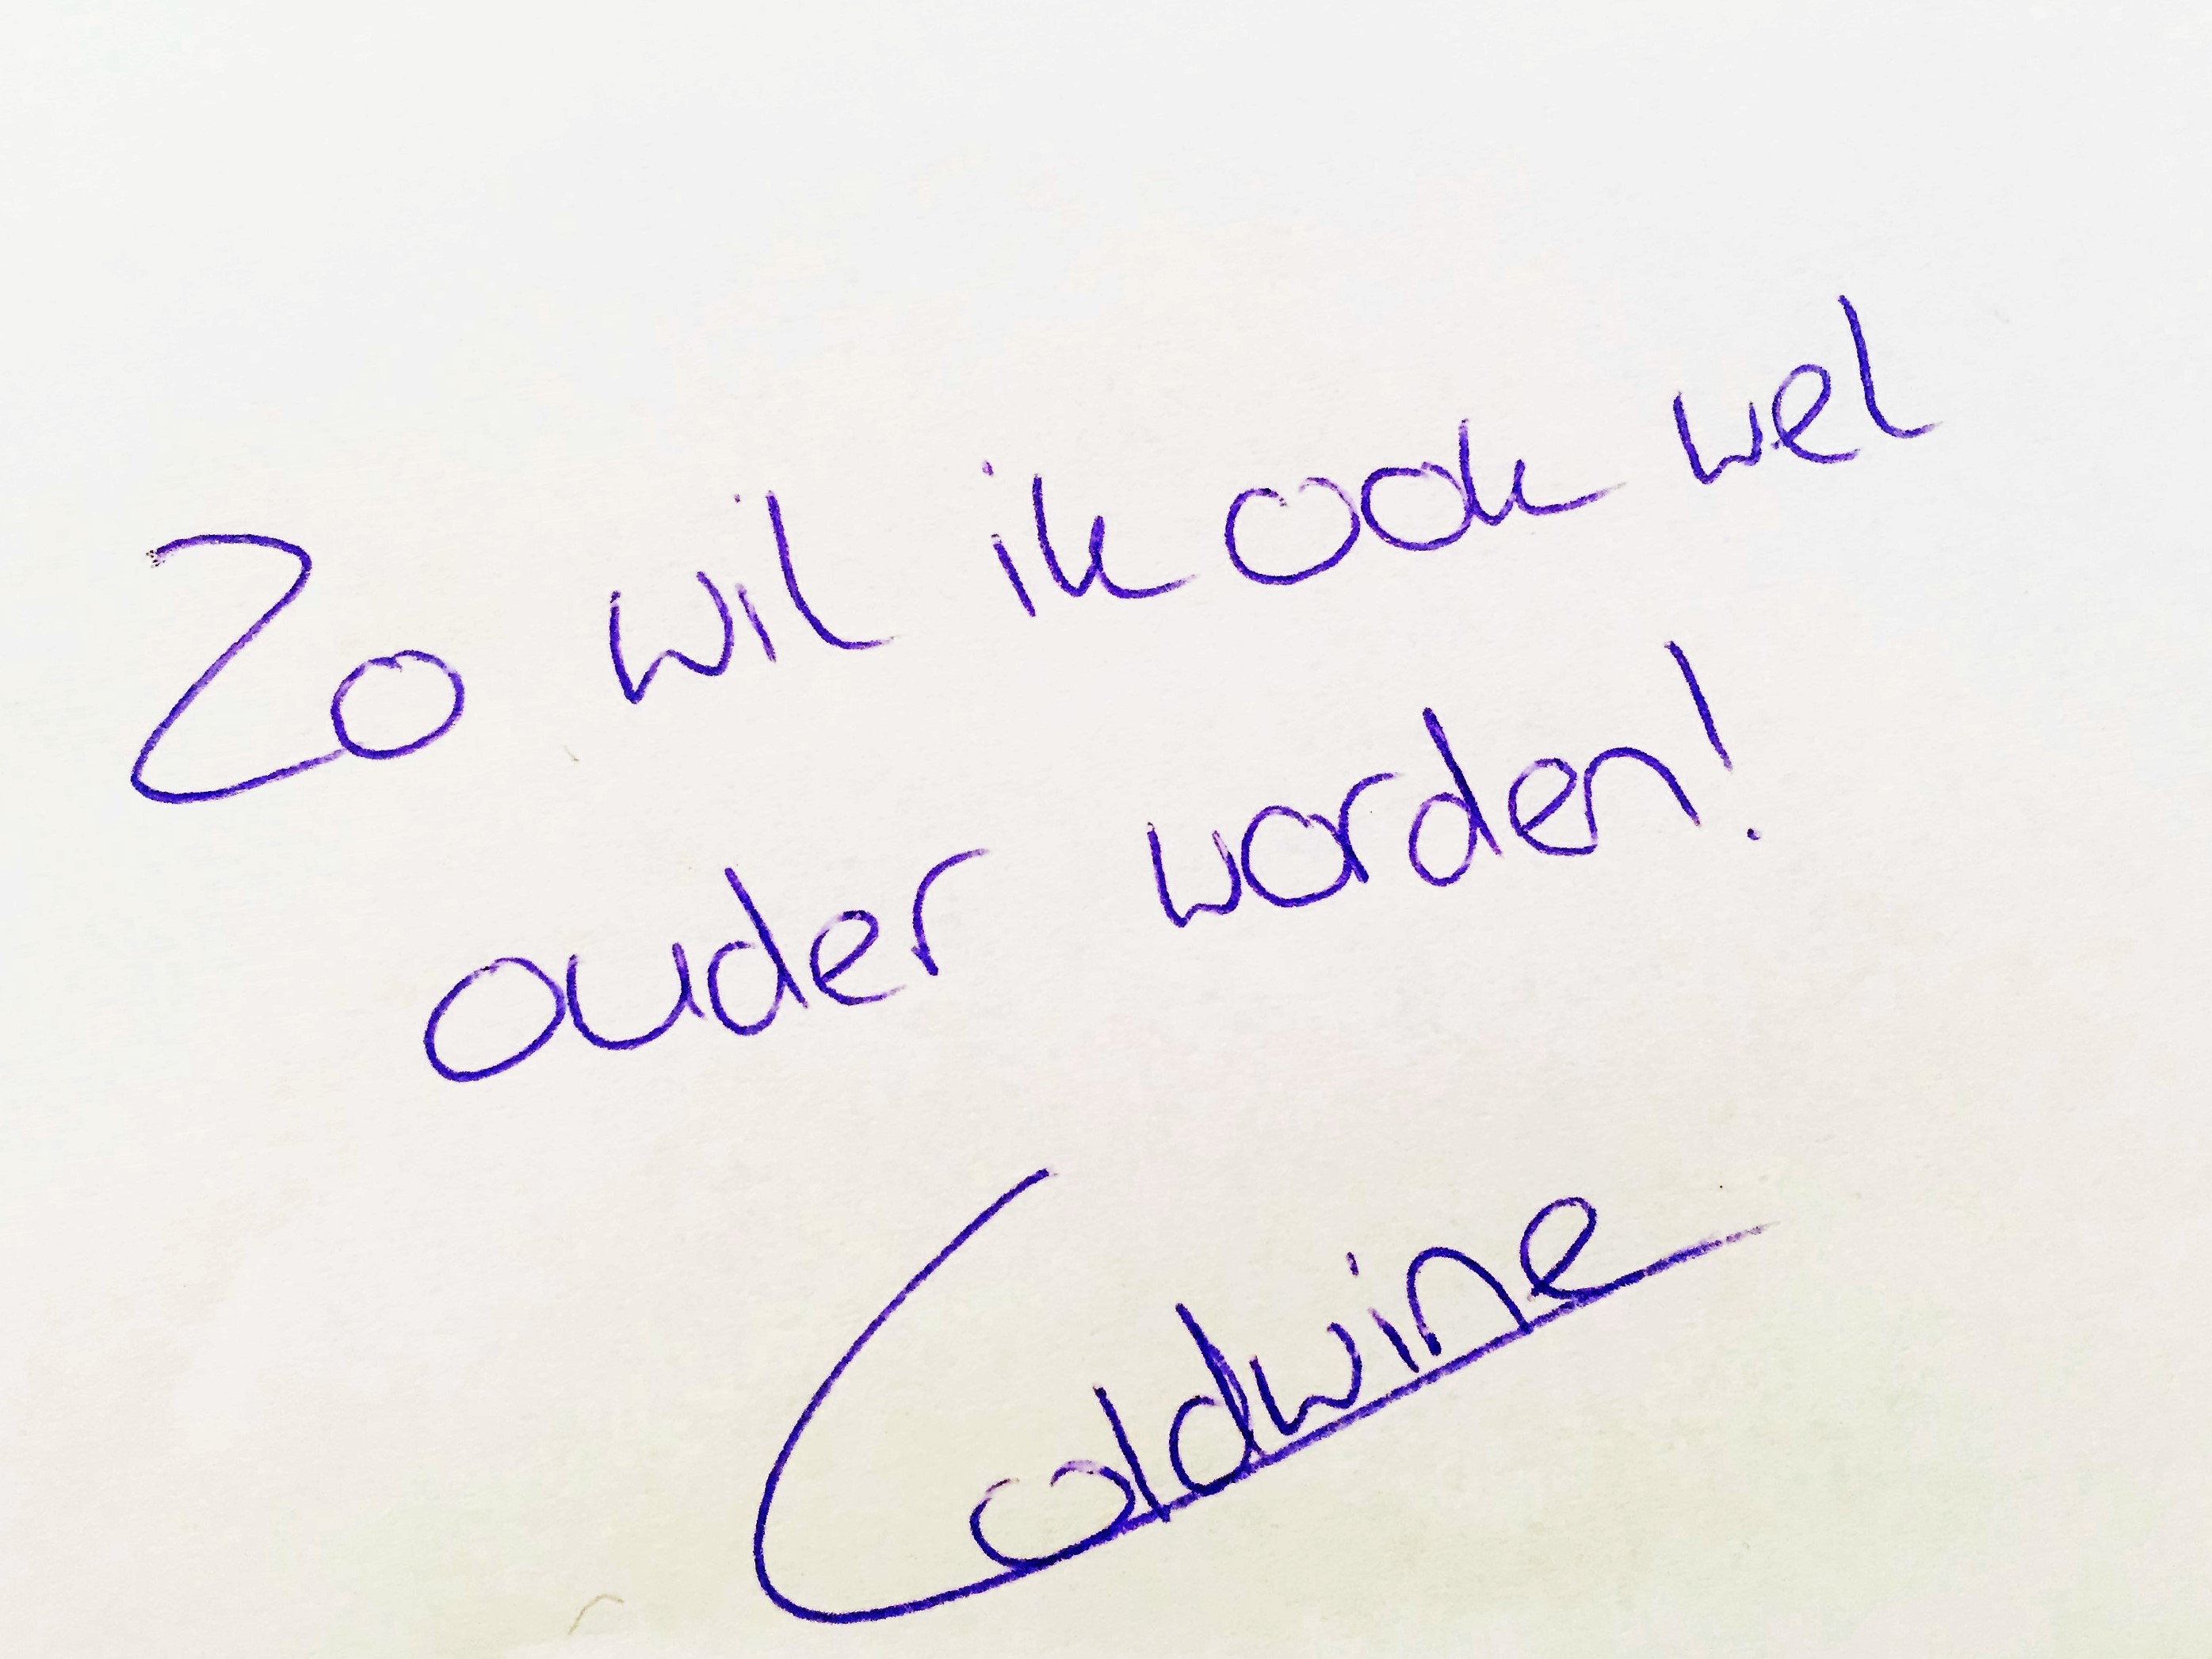 colwine-quote-1